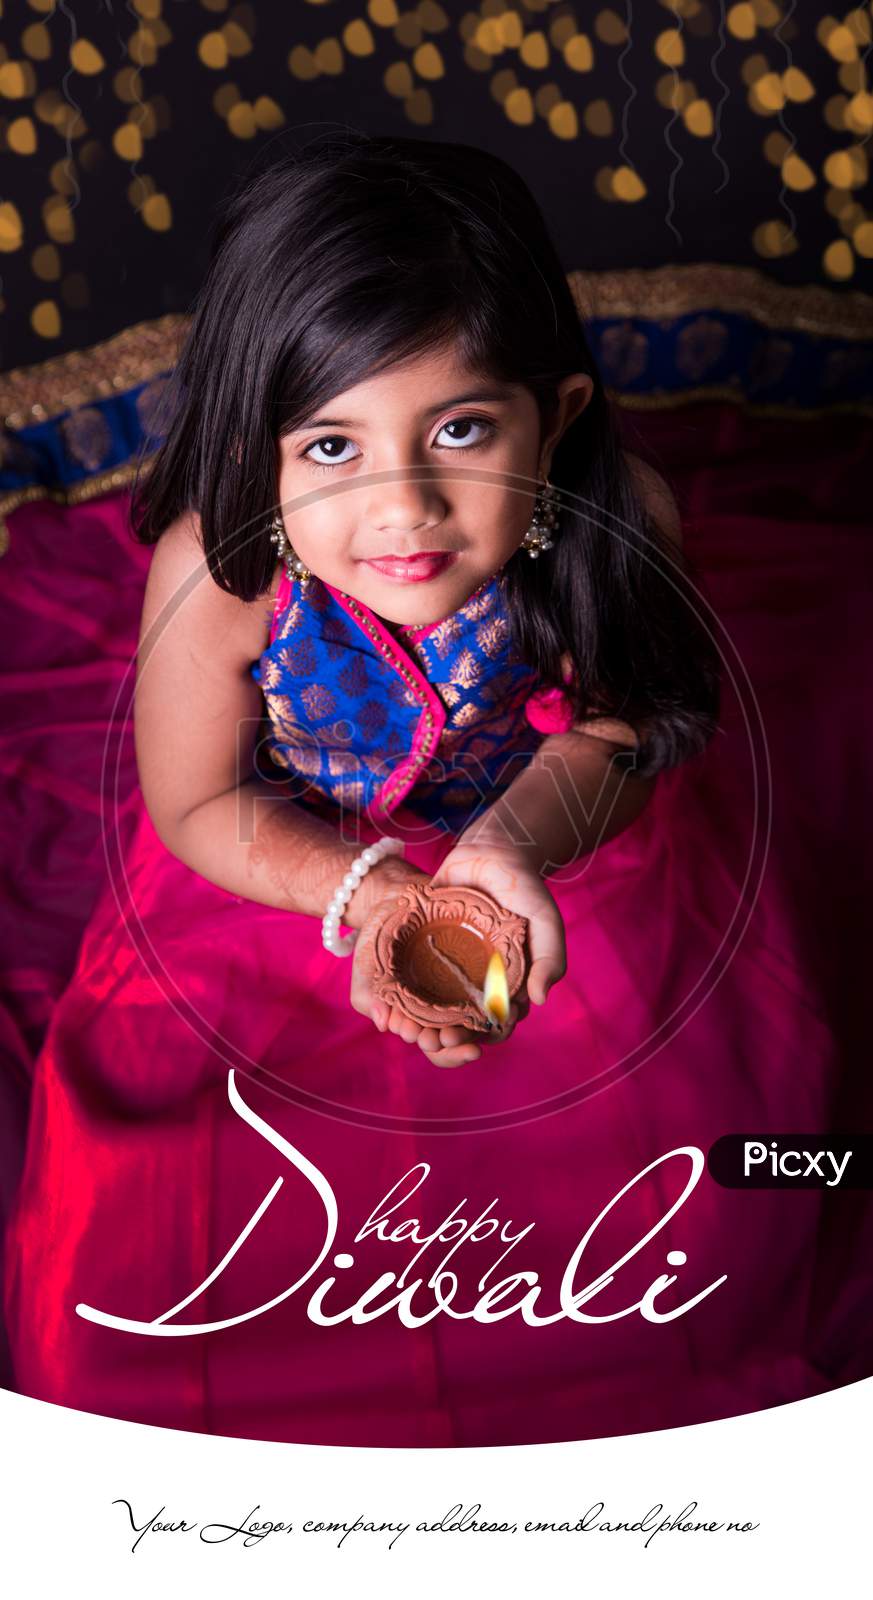 Diwali Greeting Card showing small Girl Holding Diya or oil lamp